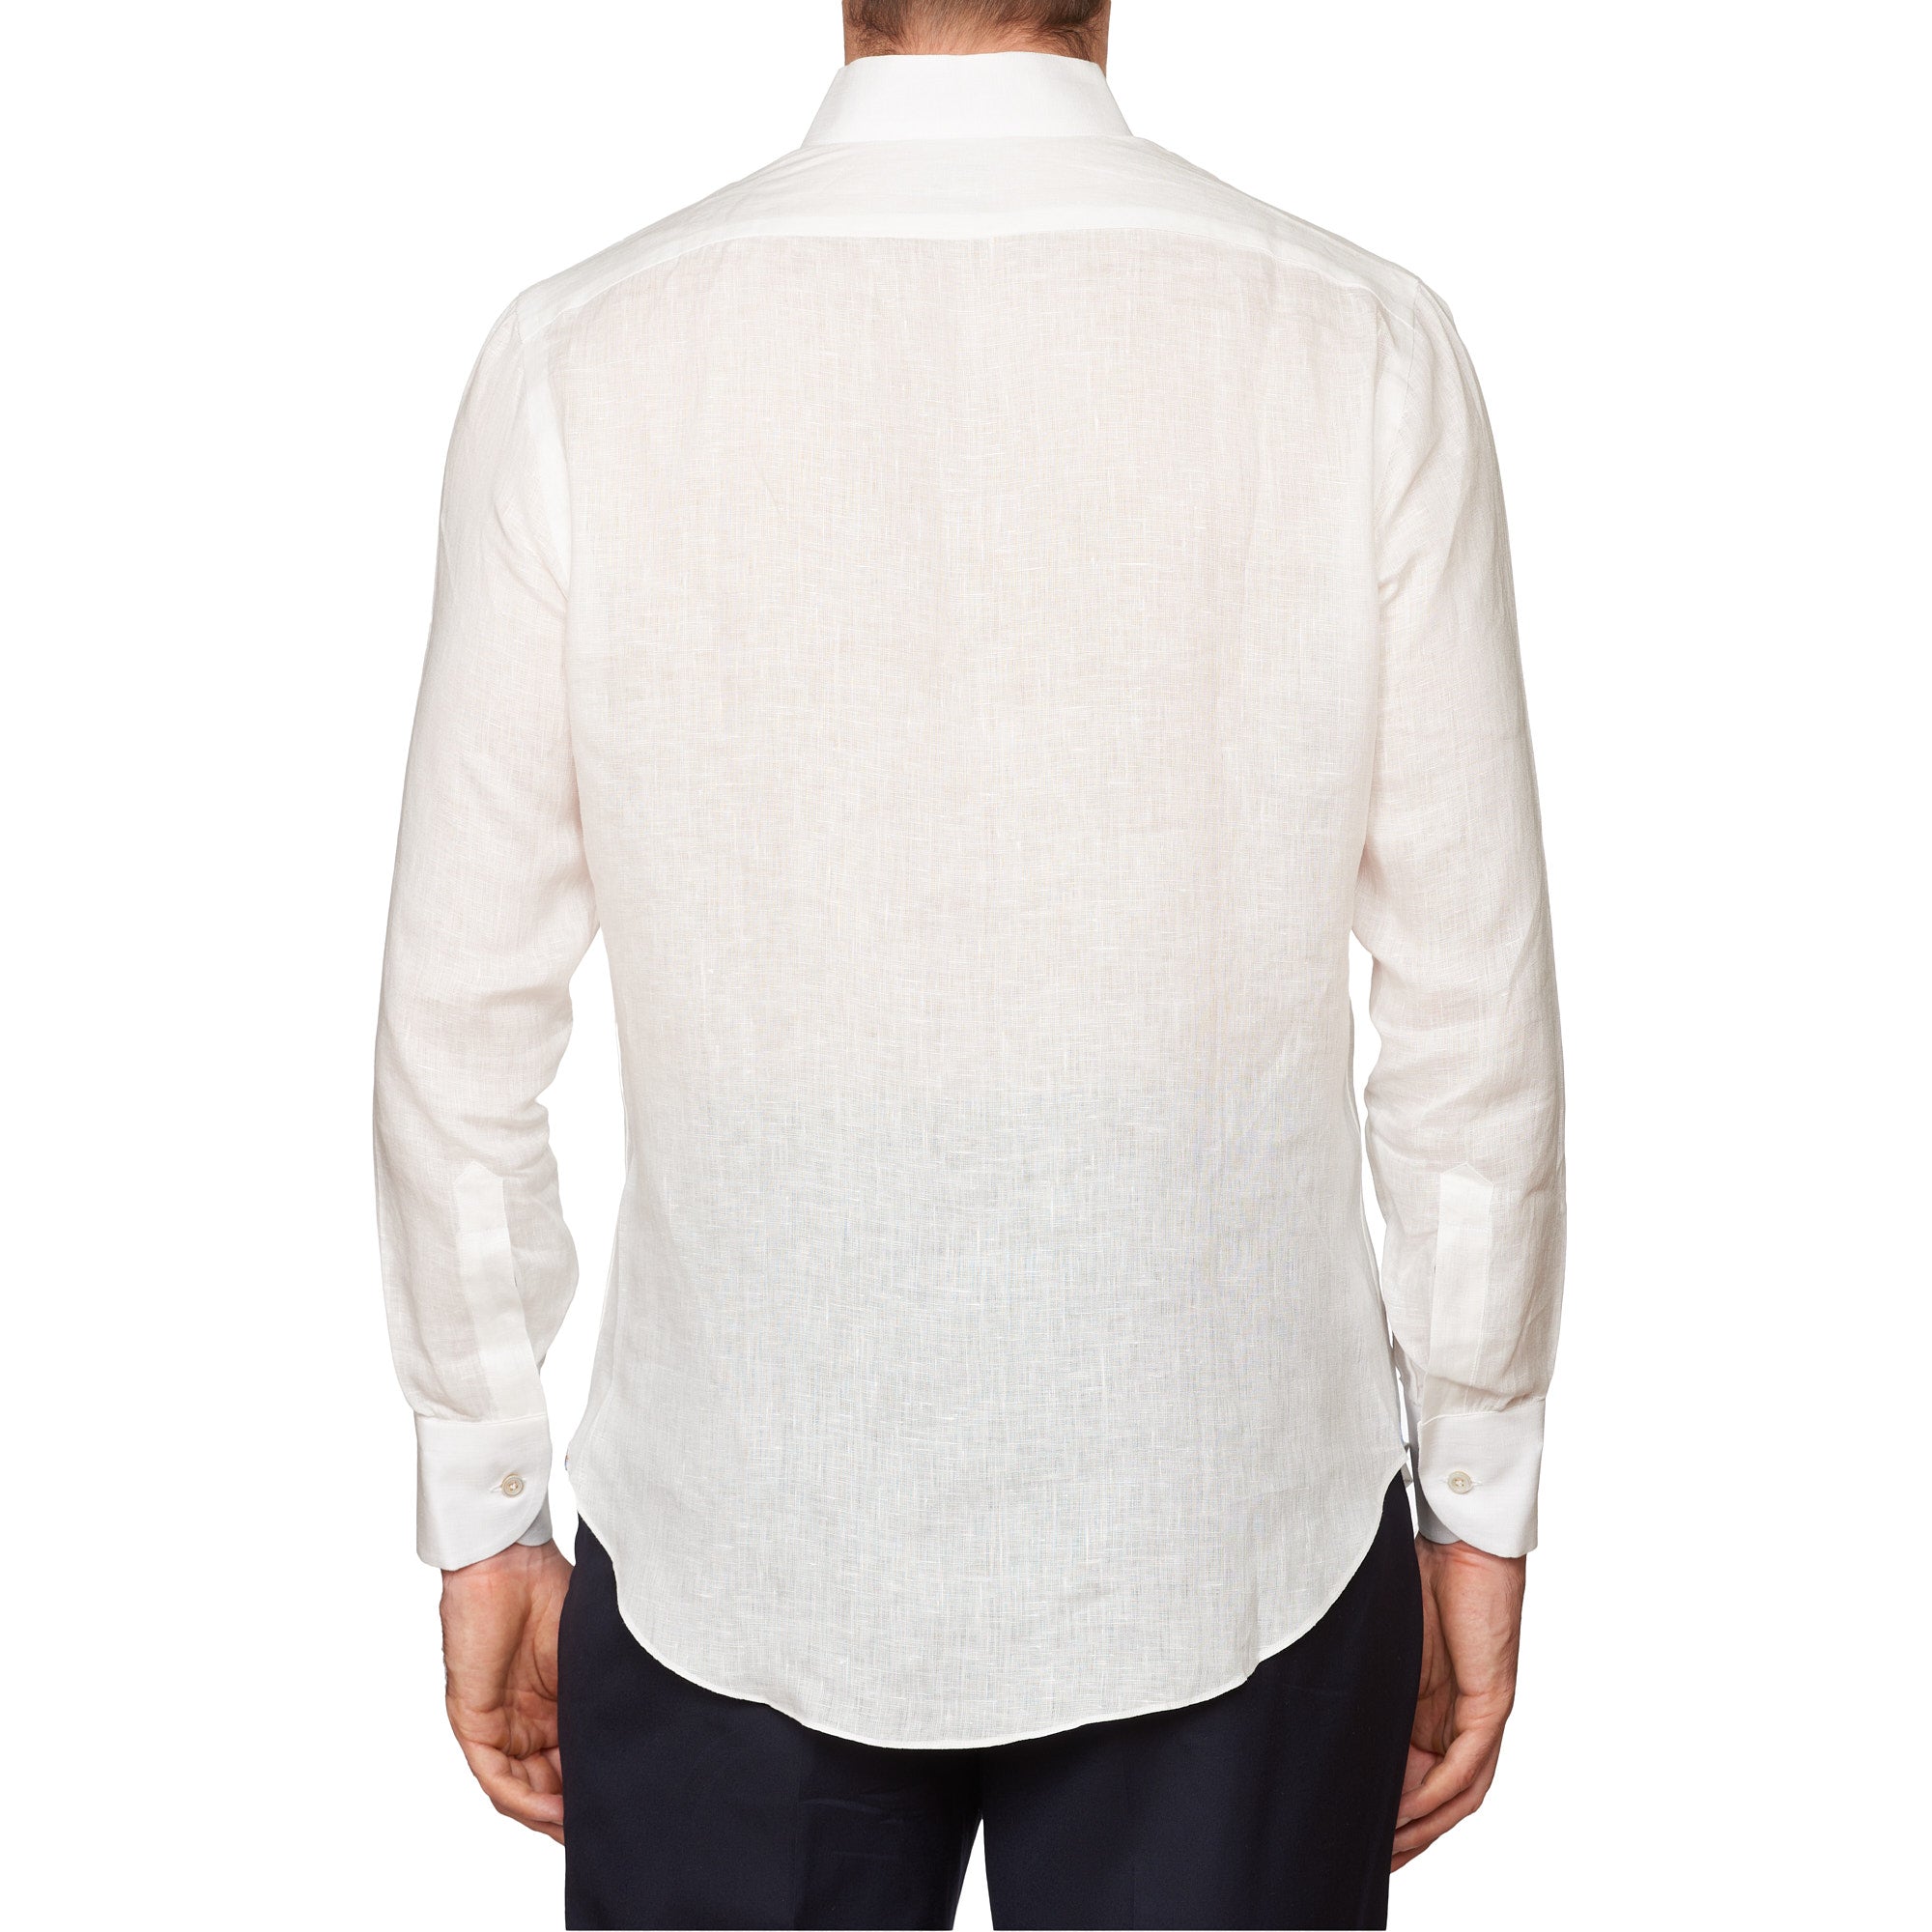 Sartoria CHIAIA Bespoke Handmade White Linen Band Collar Shirt EU 39 NEW US 15.5